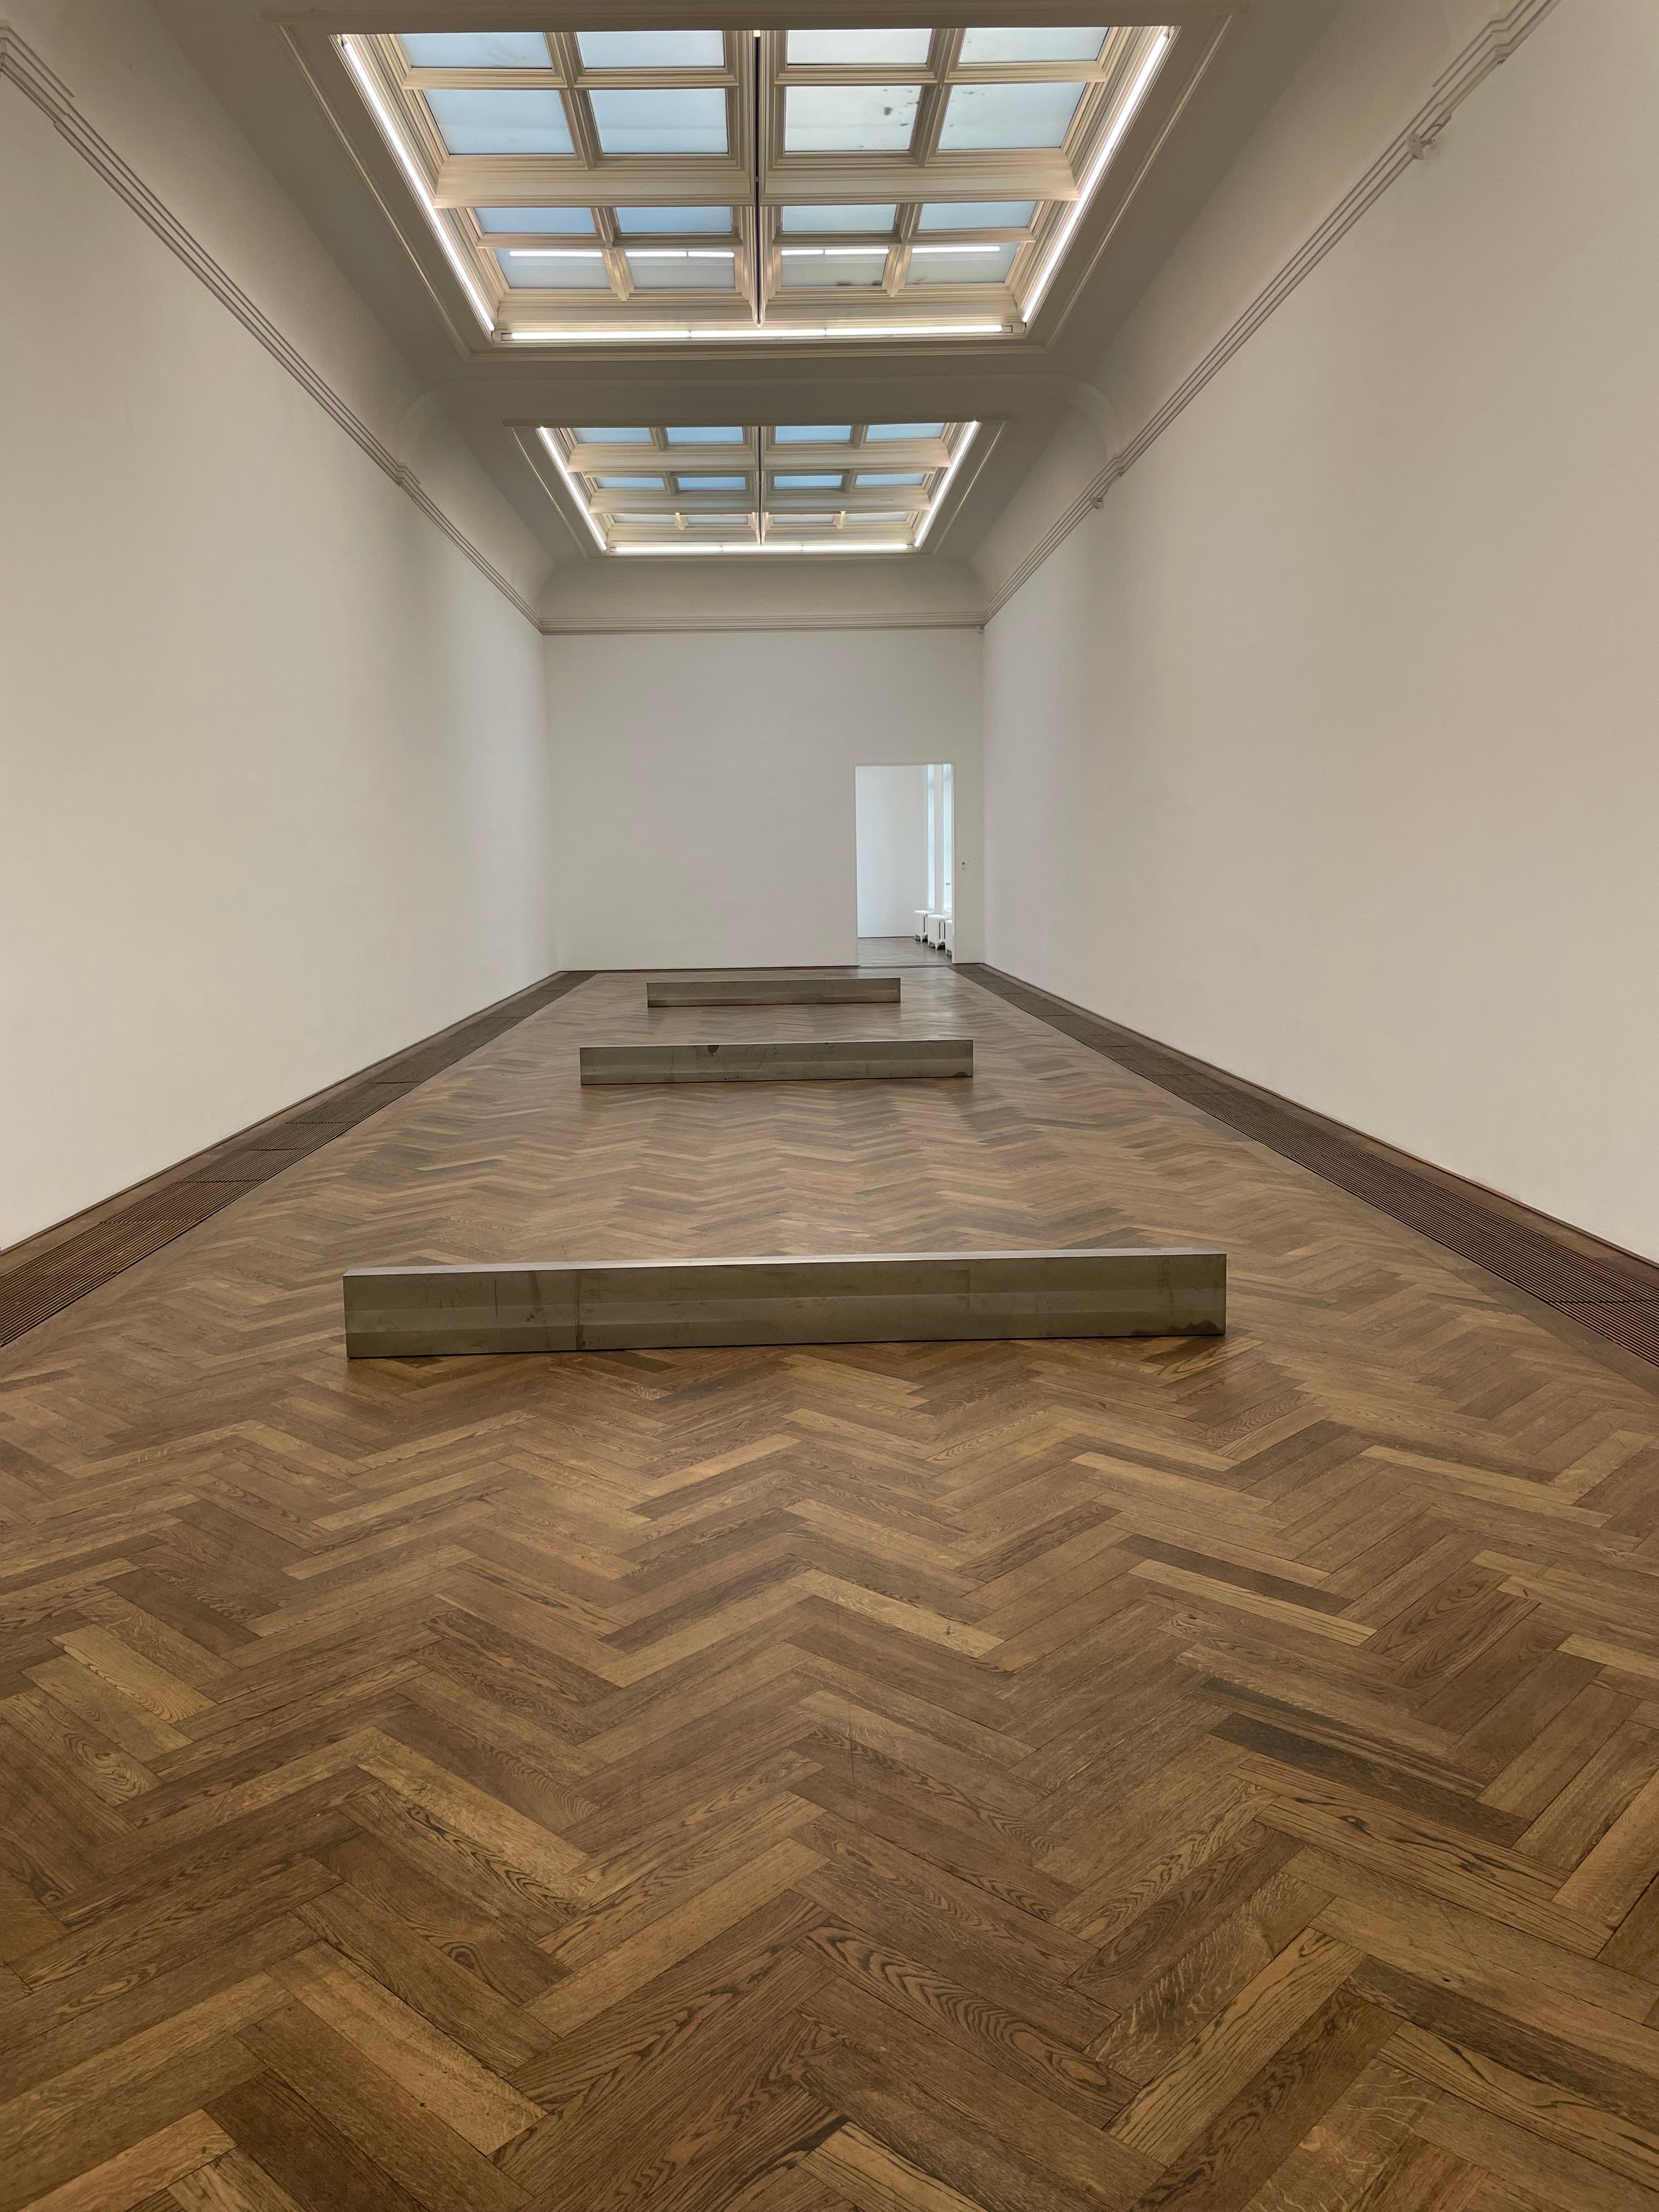 Installation view of Daniel Turner at Kunsthalle Basel